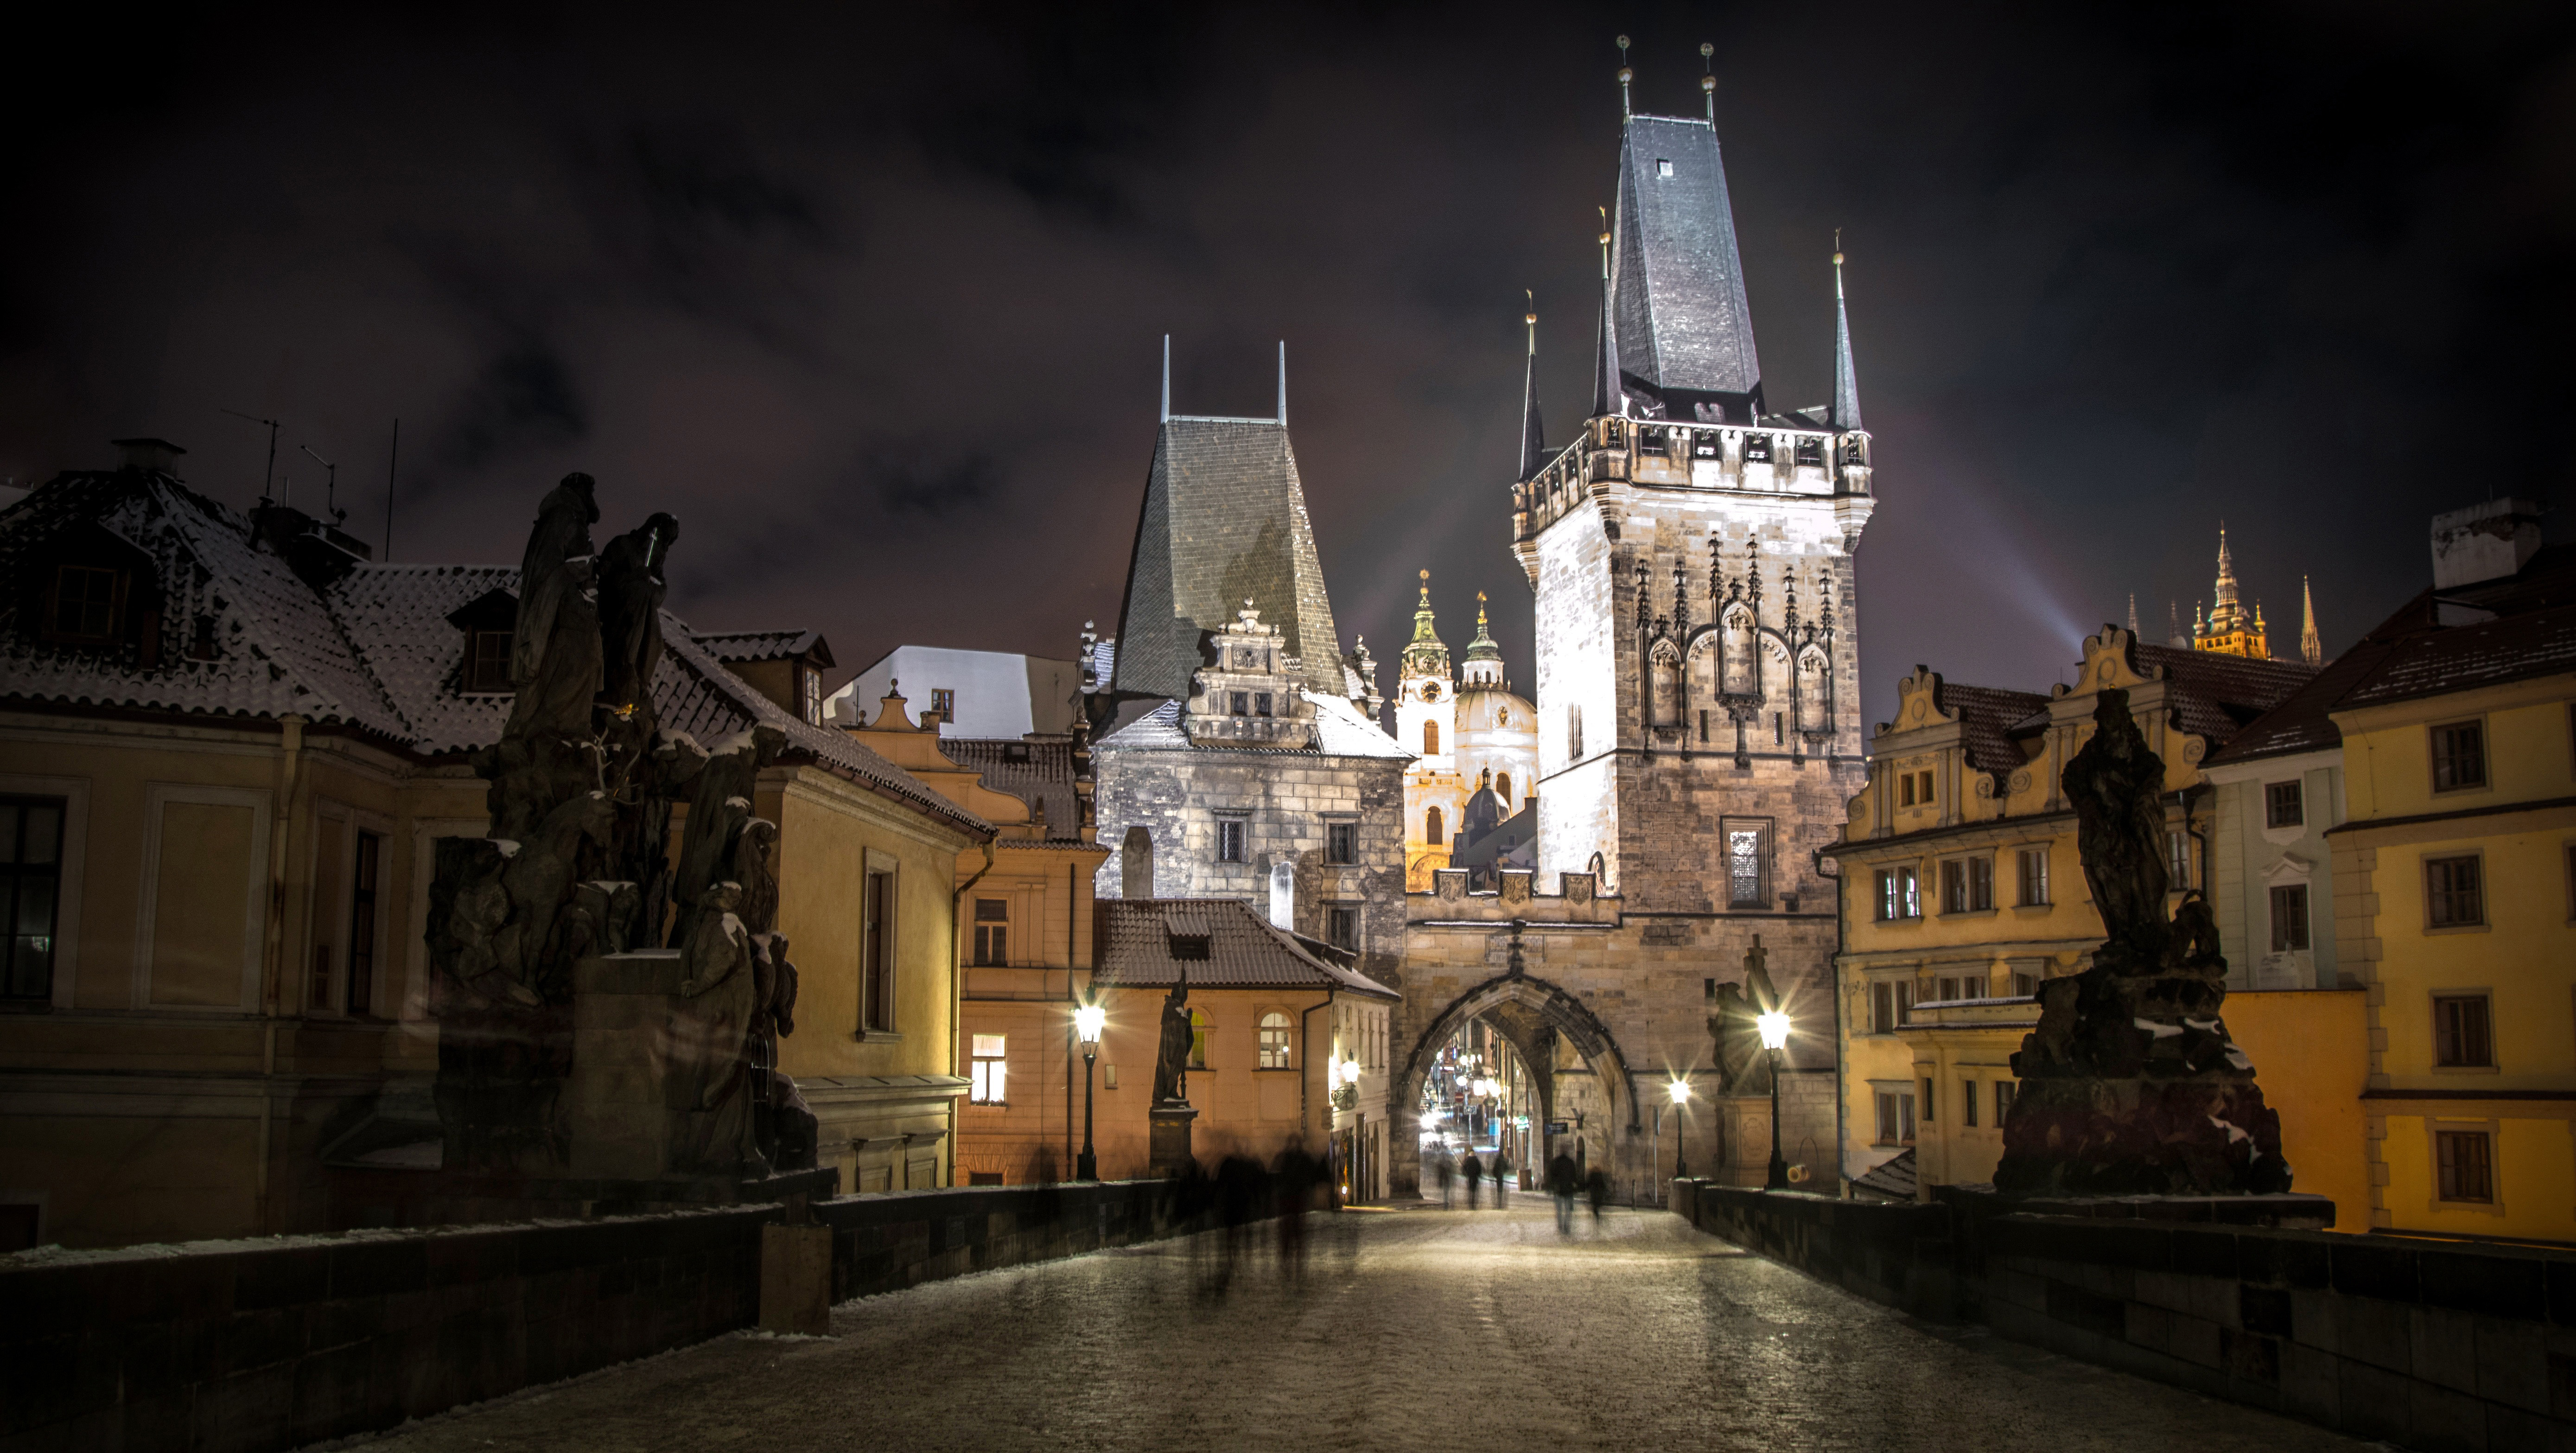 Charles Bridge and night city in Prague, Czech Republic image - Free ...